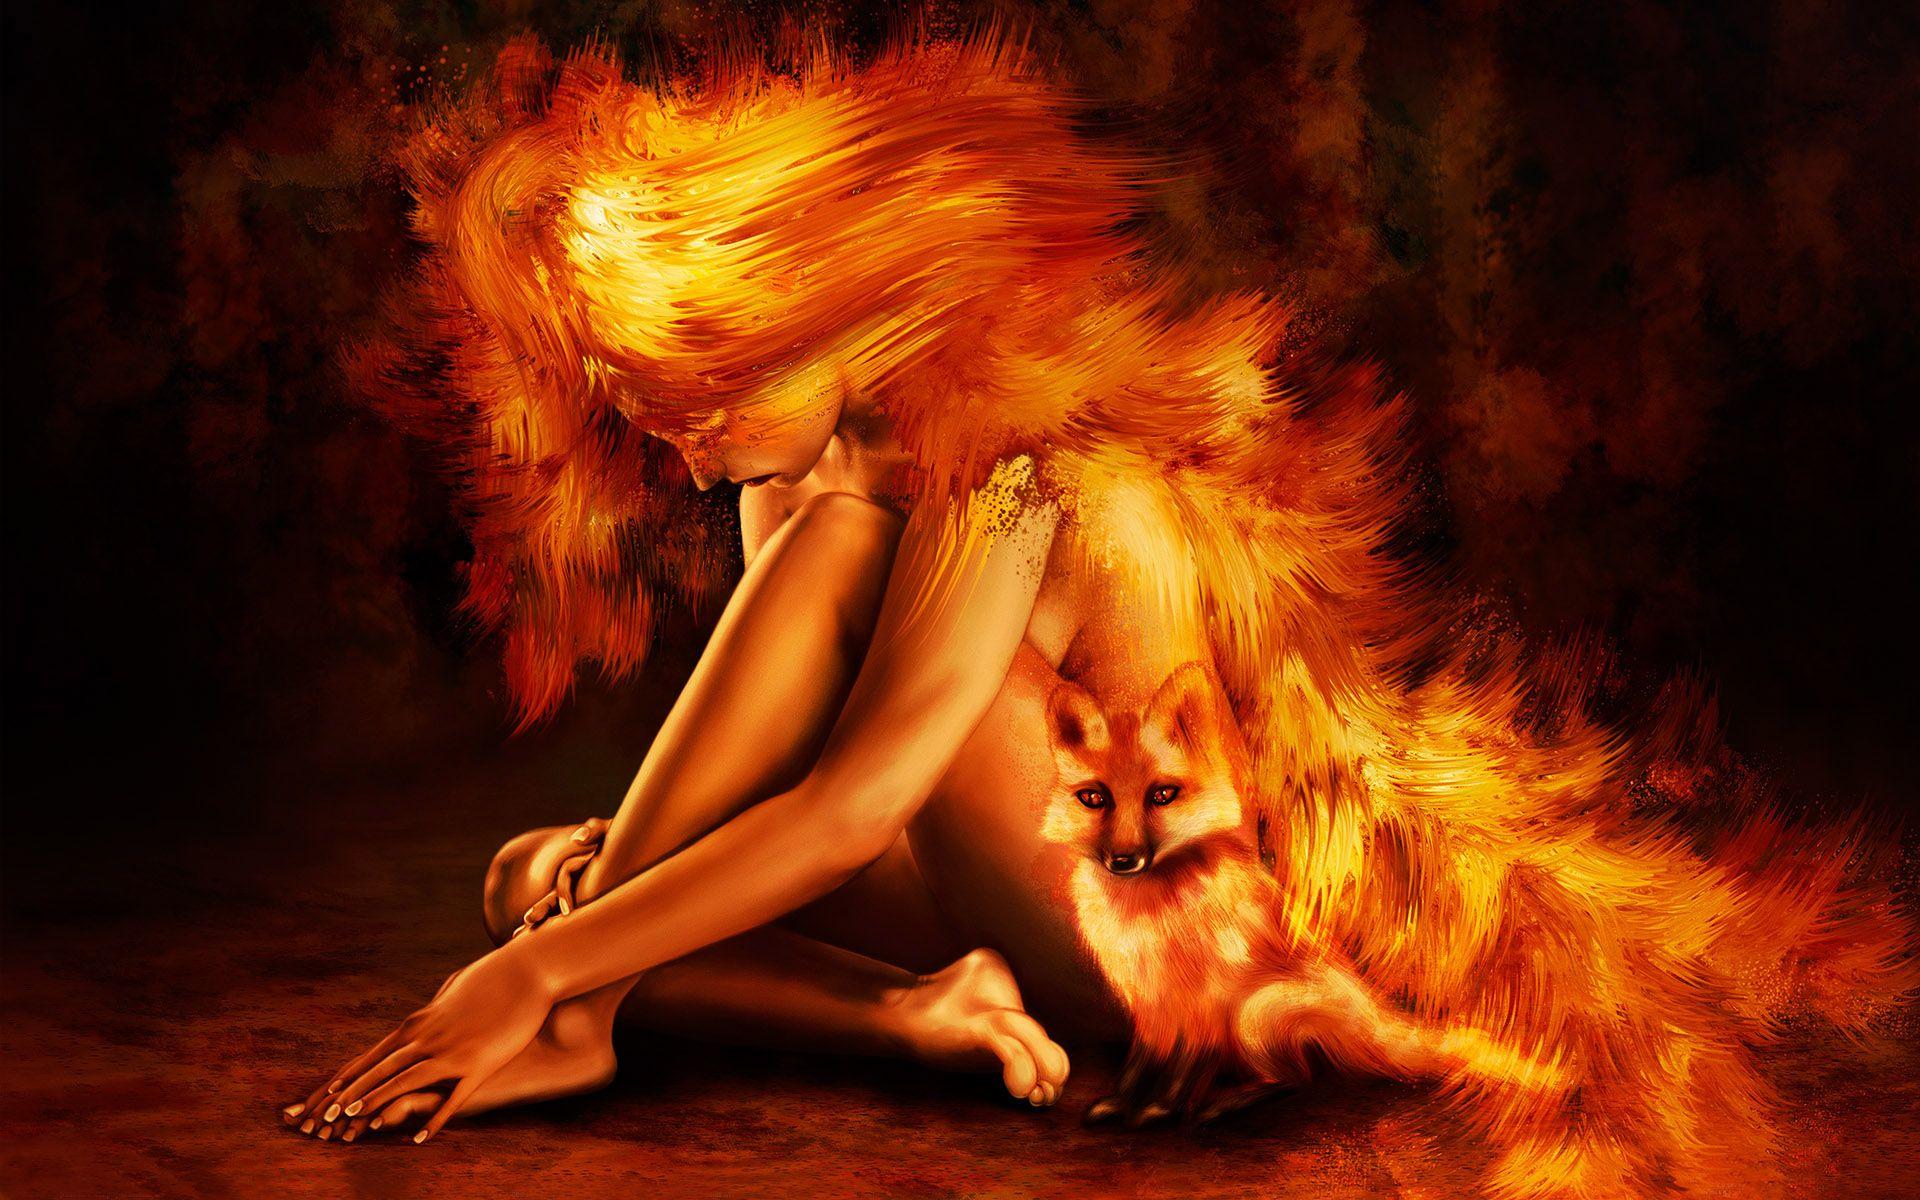 Woman And Fox On Fire X Digital Art Wallpaper. Fox girl